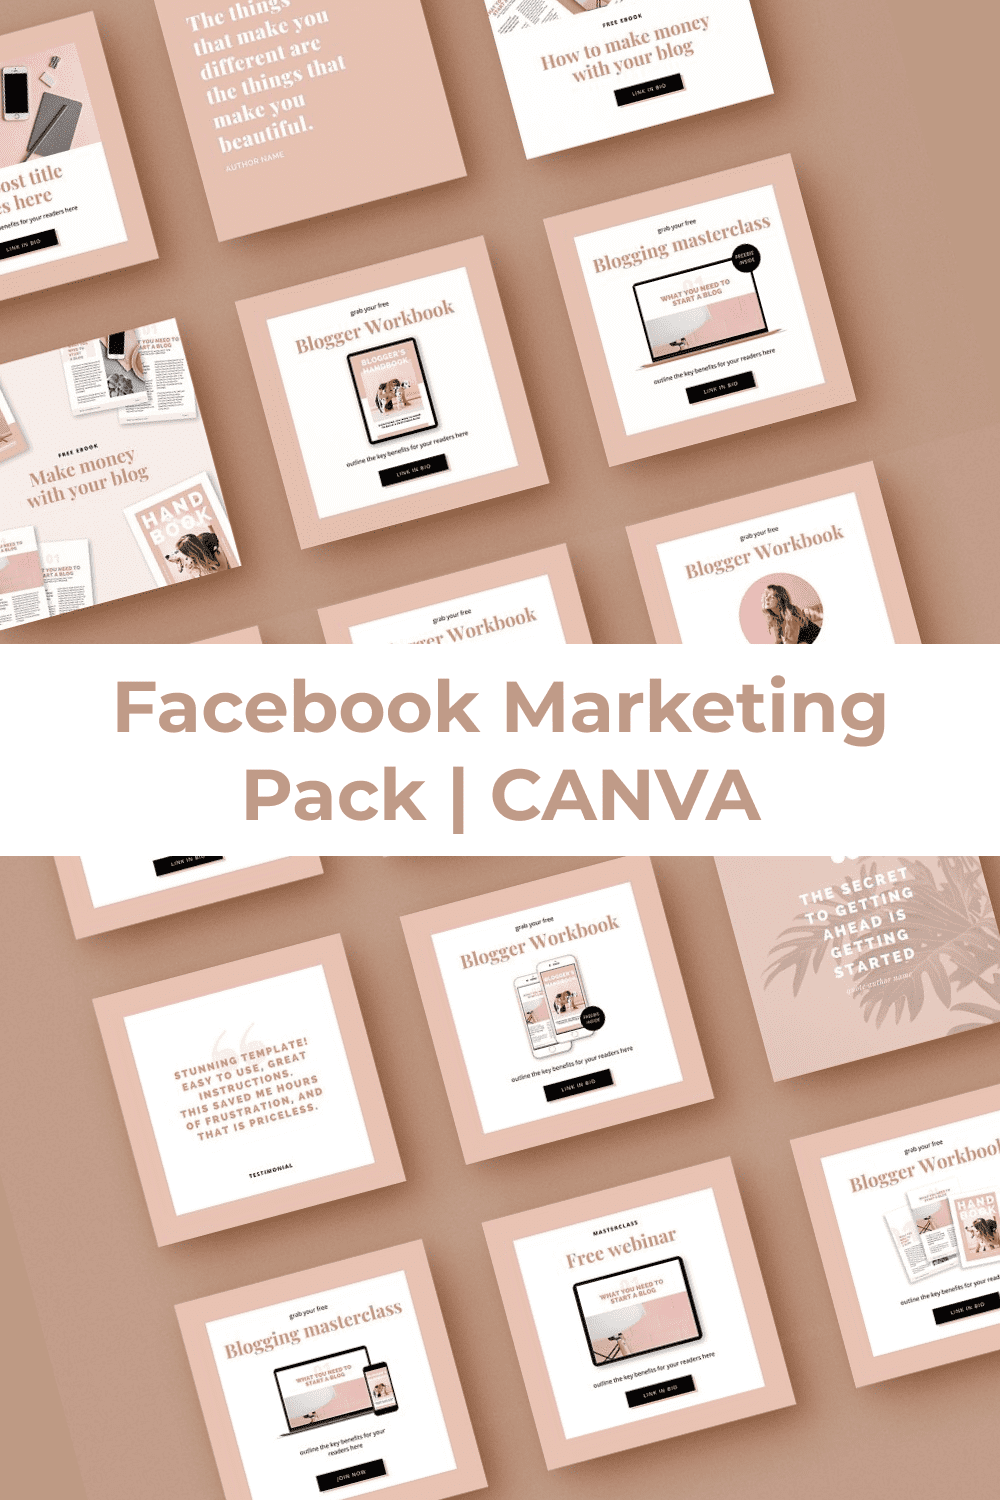 Facebook Marketing Pack | CANVA - Pinterest.